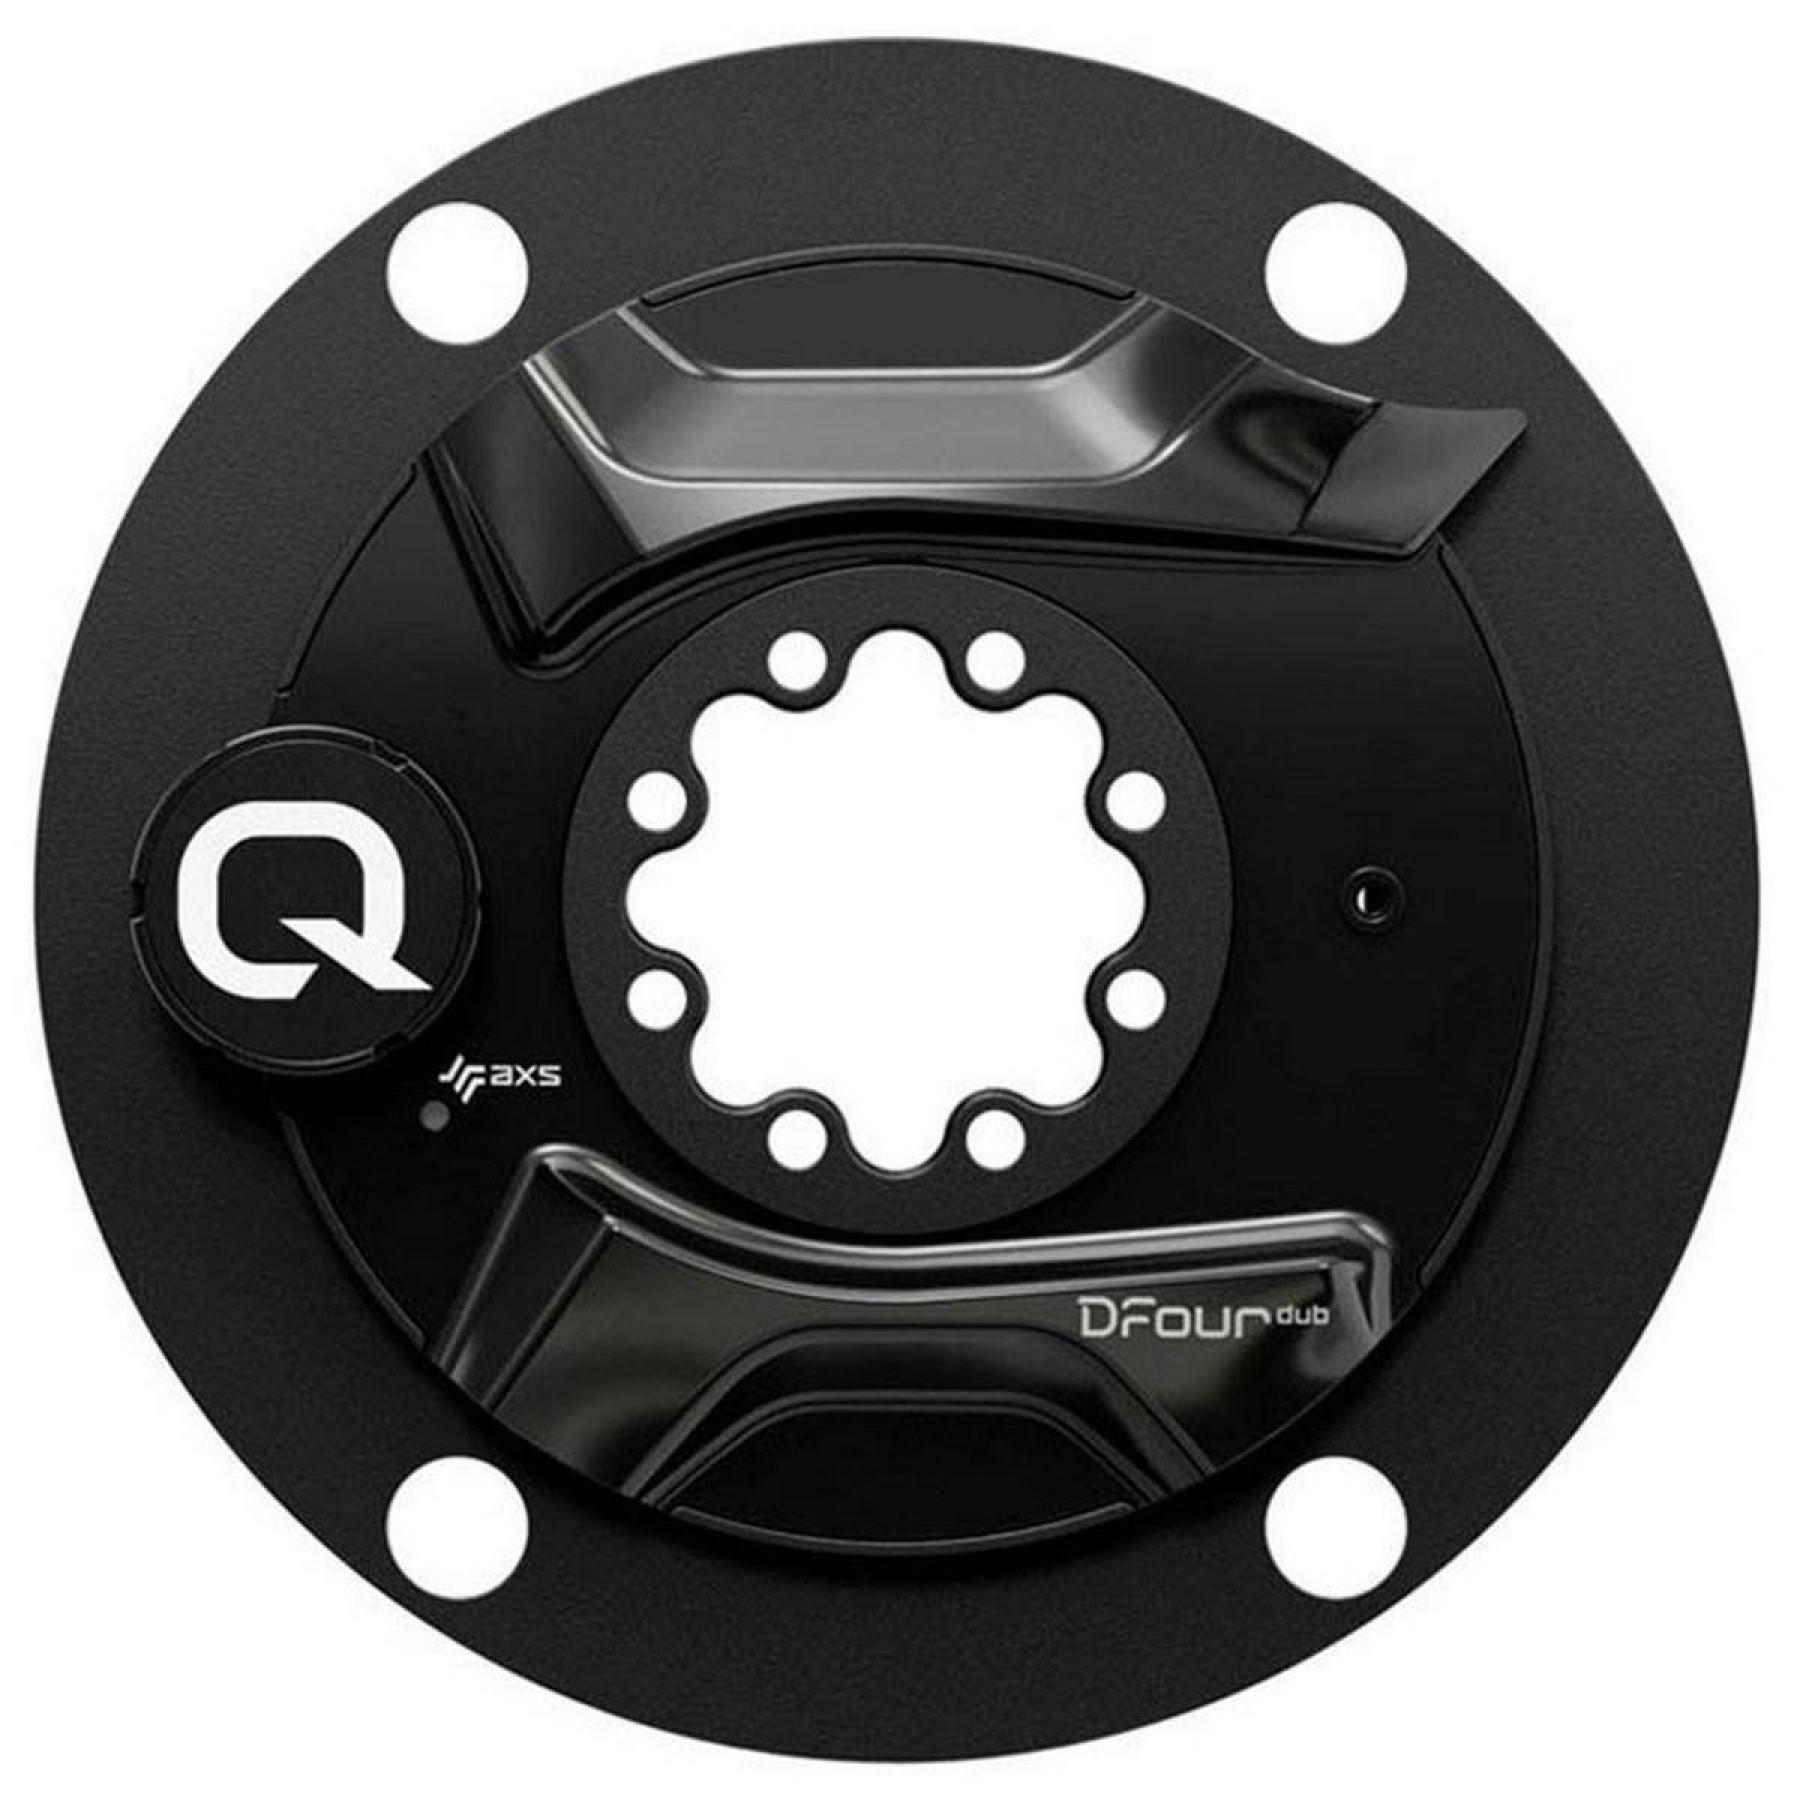 Power sensor Quarq Dfour dub 110BCD Shimano (BB not in)